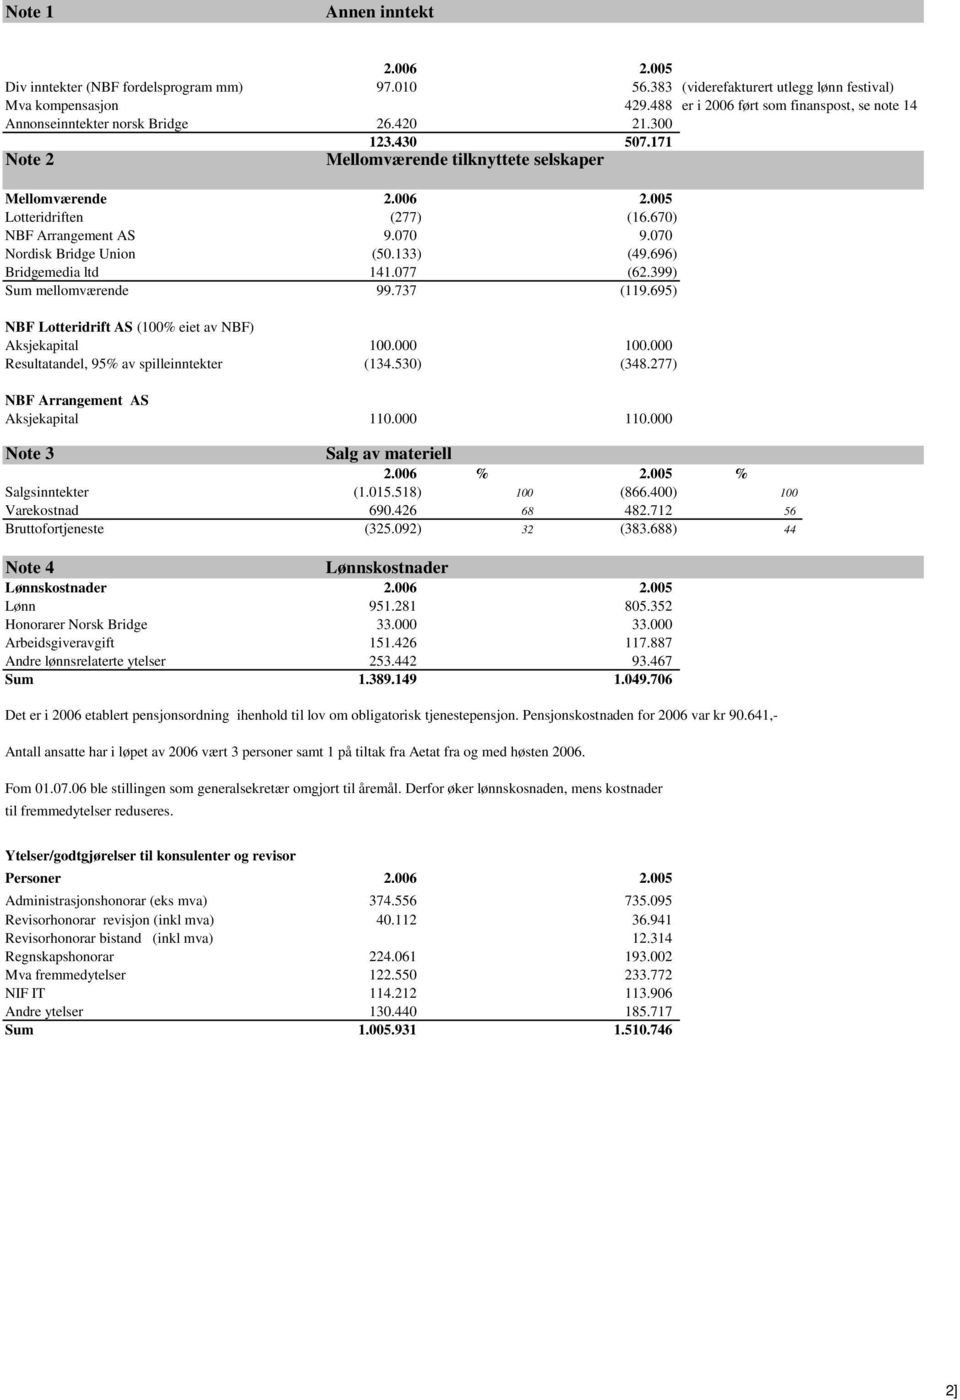 670) NBF Arrangement AS 9.070 9.070 Nordisk Bridge Union (50.133) (49.696) Bridgemedia ltd 141.077 (62.399) Sum mellomværende 99.737 (119.695) NBF Lotteridrift AS (100% eiet av NBF) Aksjekapital 100.